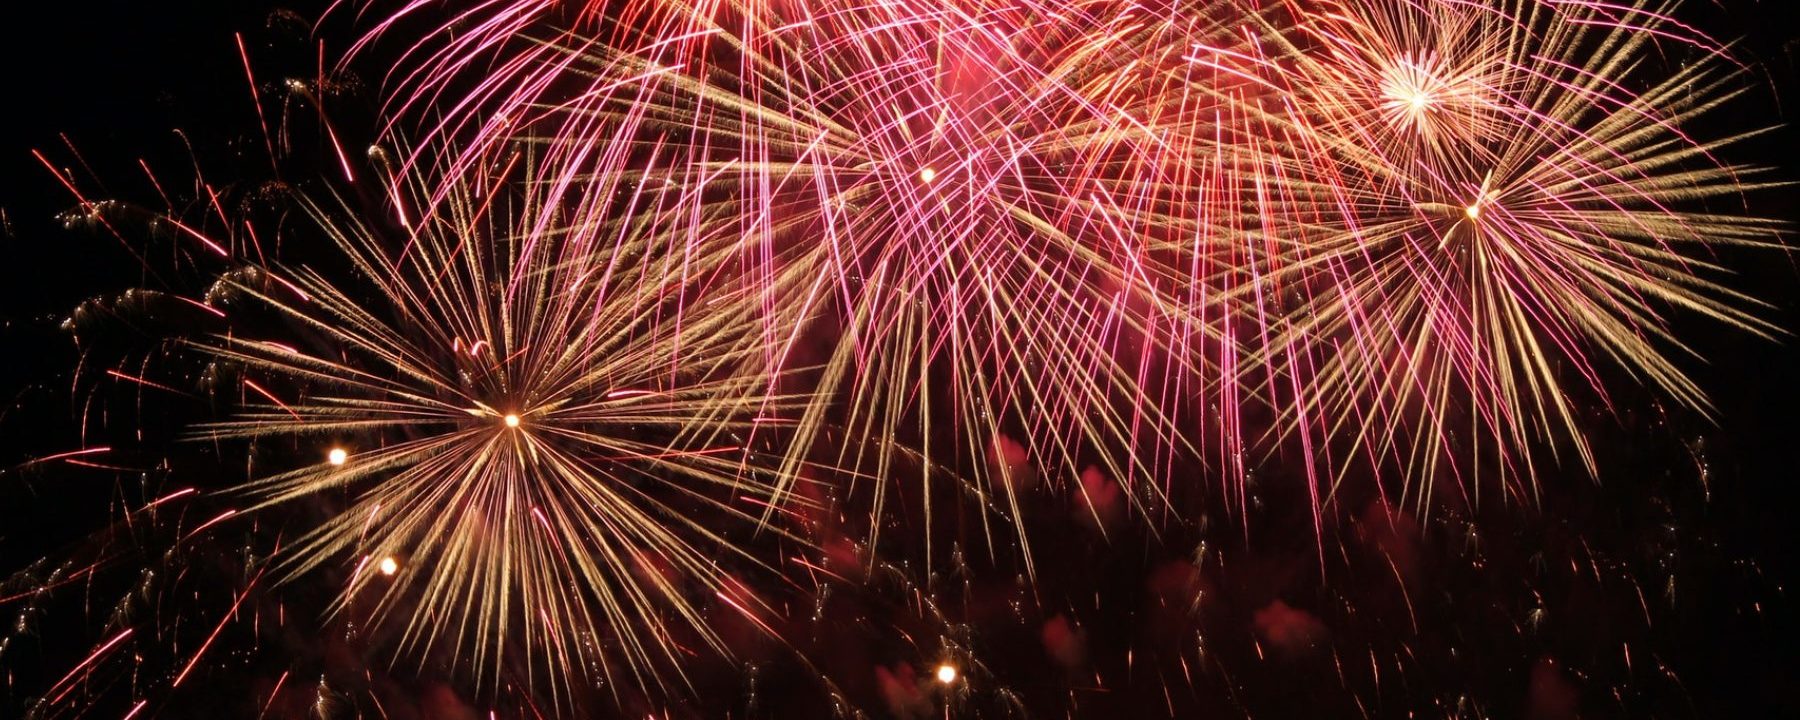 fireworks-festivities-event-10pexels-aspect-ratio-2000-800